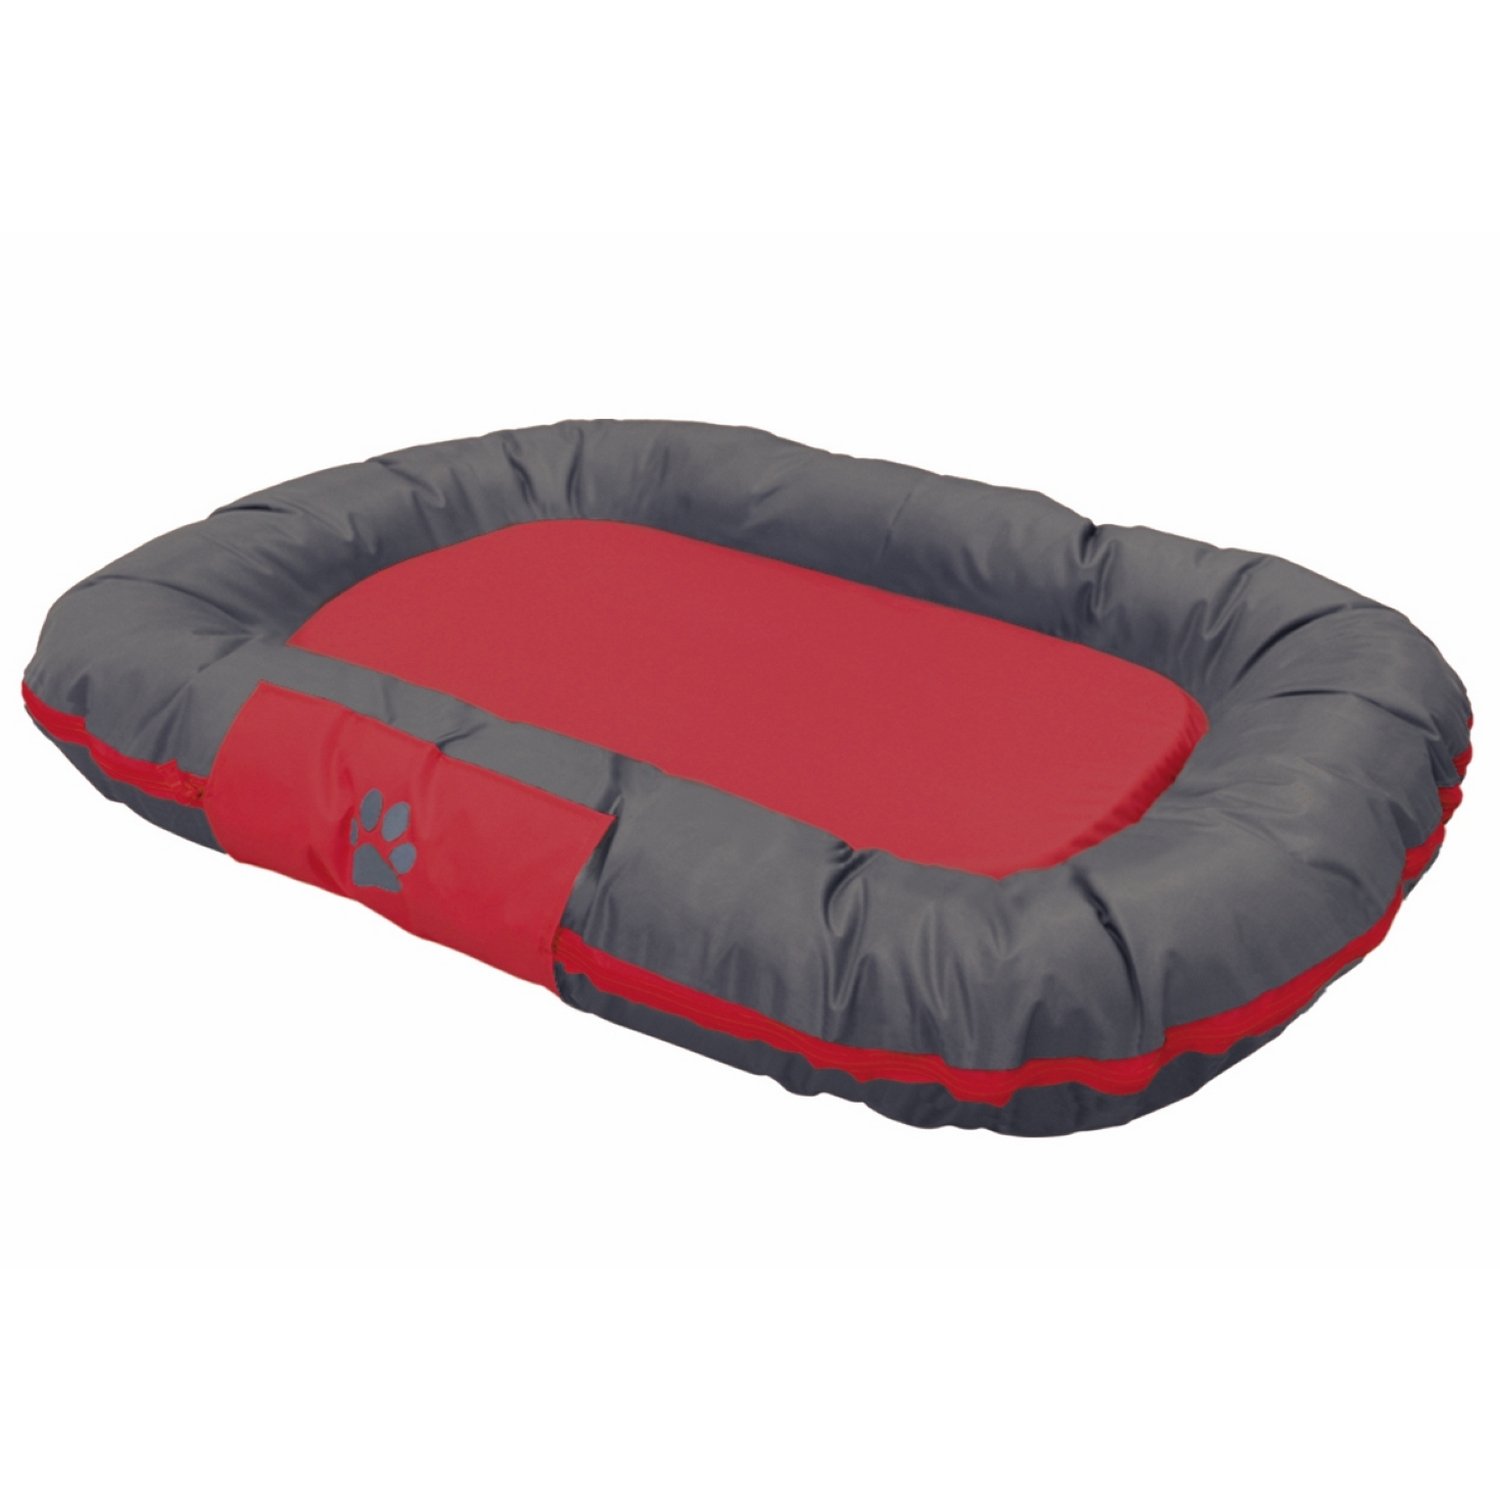 Лежак для животных Nobby Reno средний Серый-Красный  80х58х10 см - фото 1